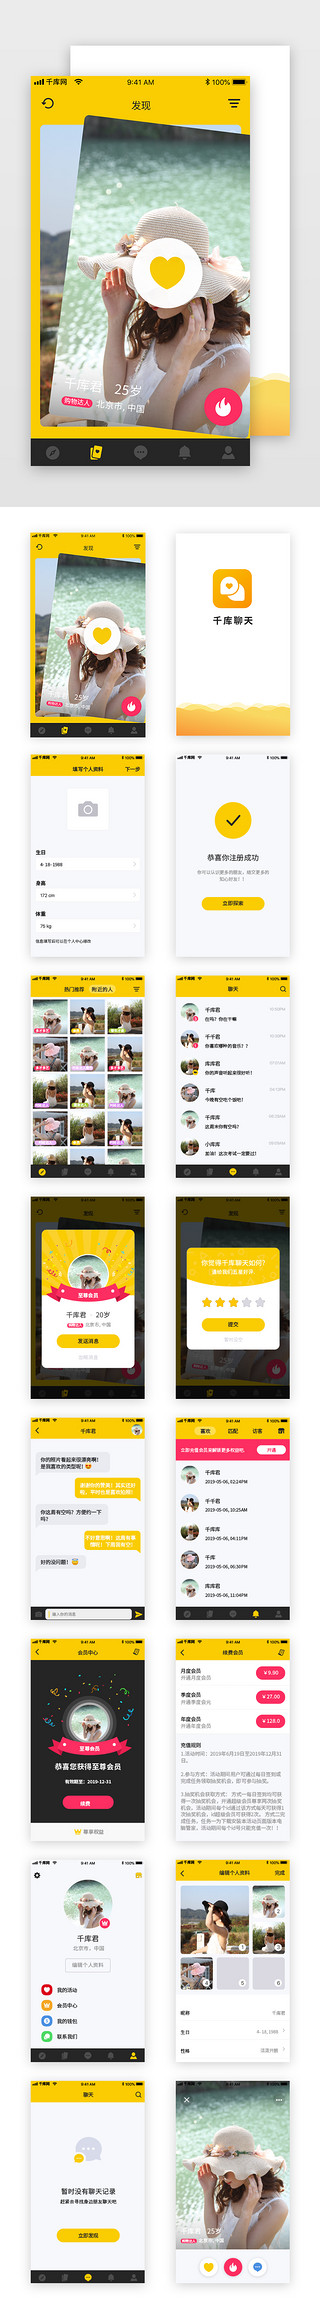 app套图黄色UI设计素材_黄色简约大气社交聊天交友App套图